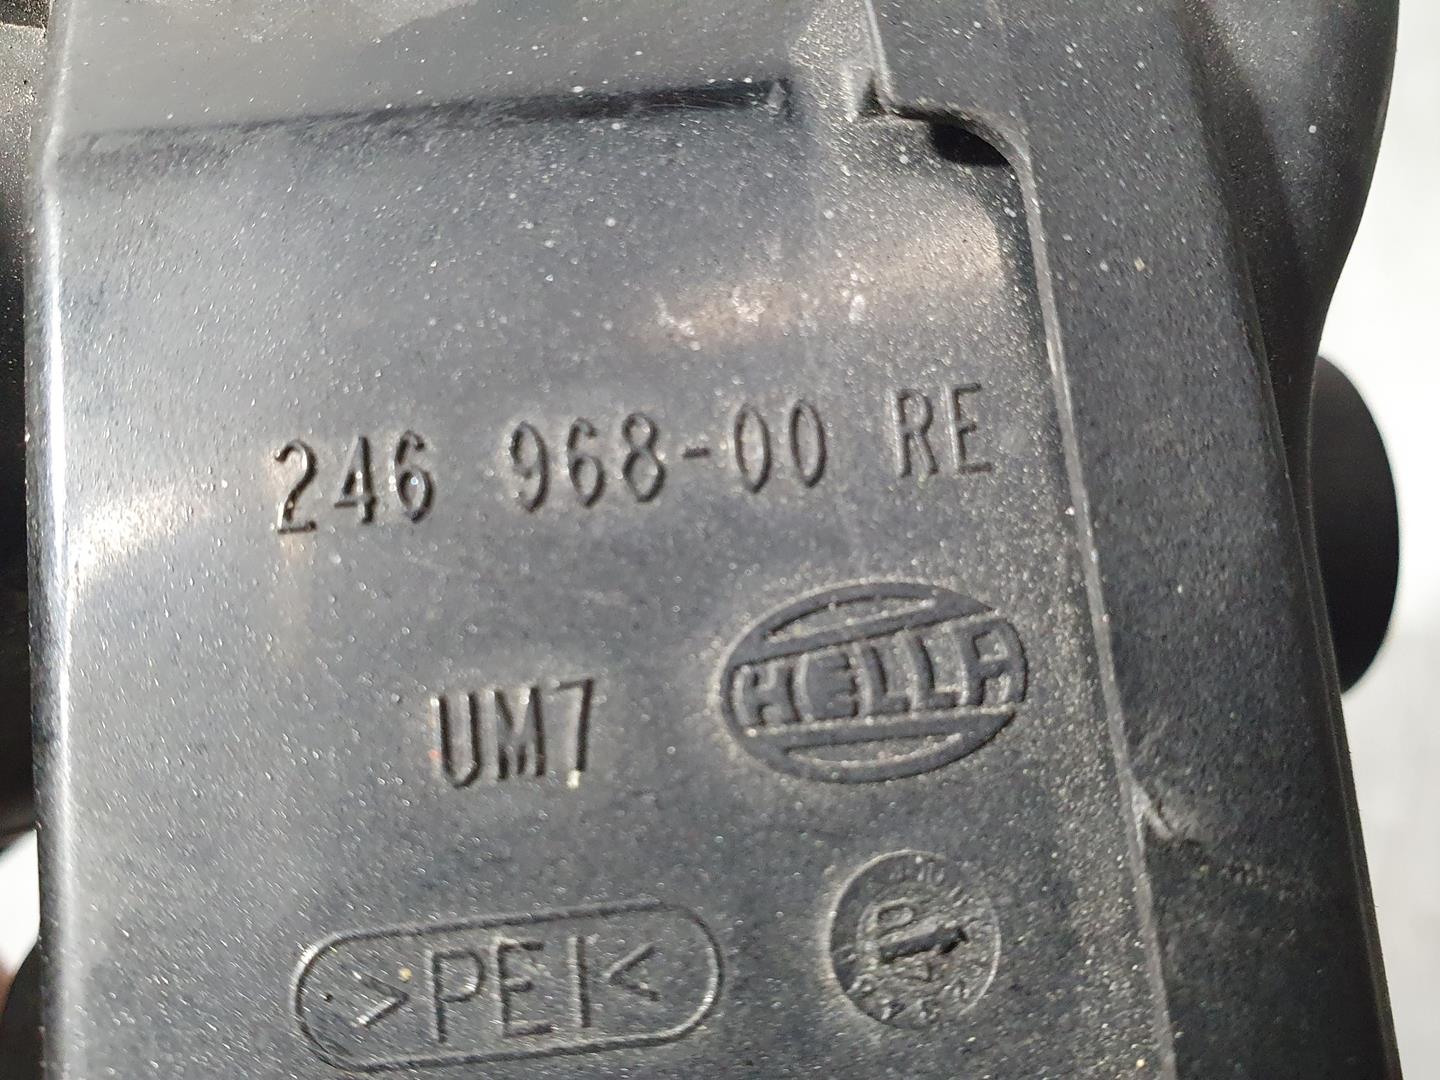 AUDI Q7 4L (2005-2015) Противотуманка бампера передняя правая 24696800RE, HELLA 18712425